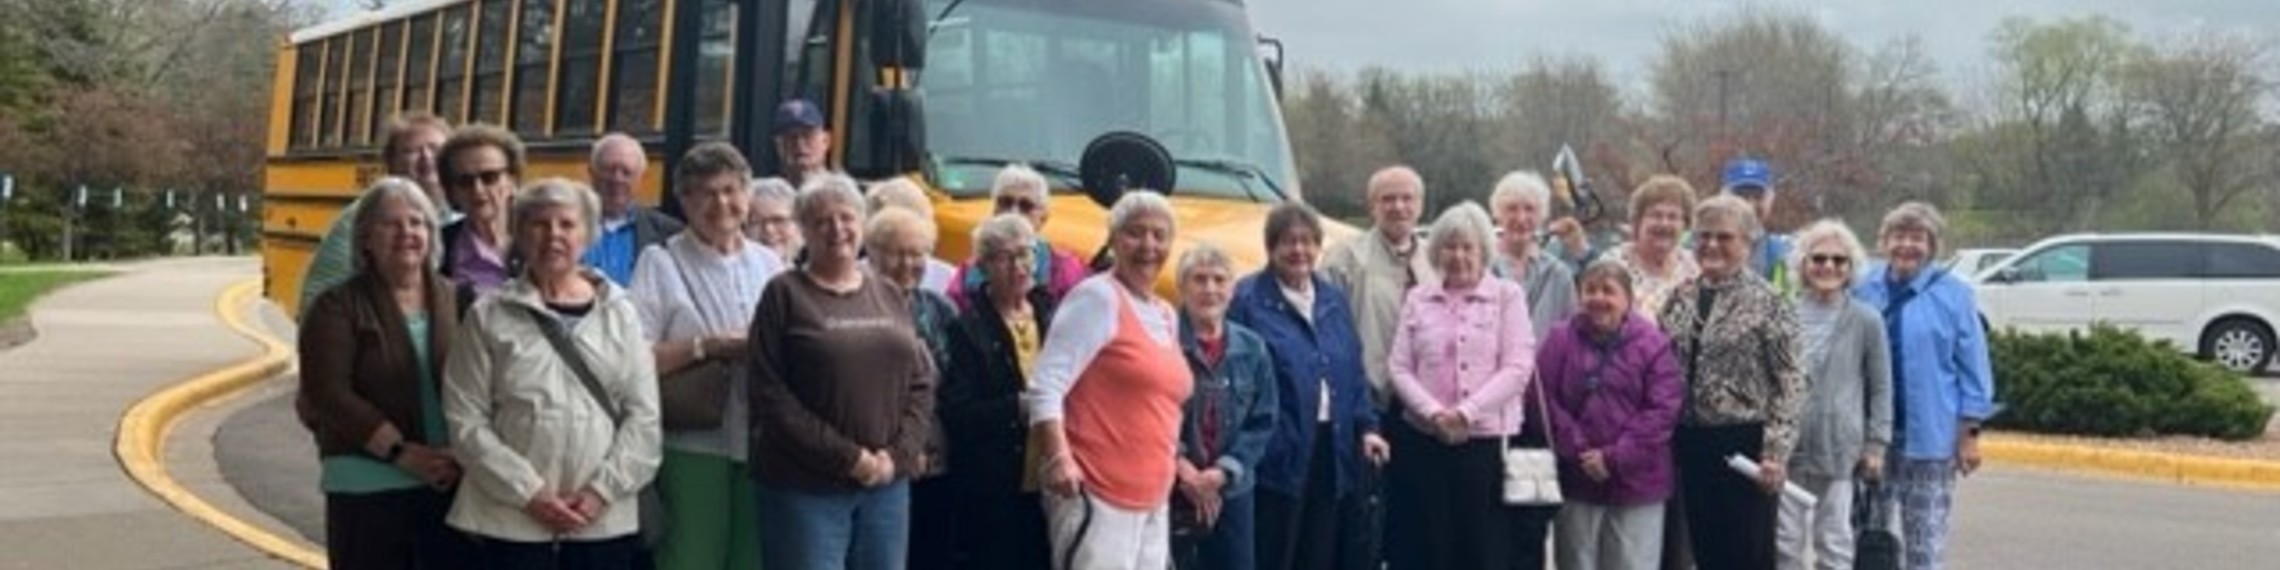 Senior Bus Trip